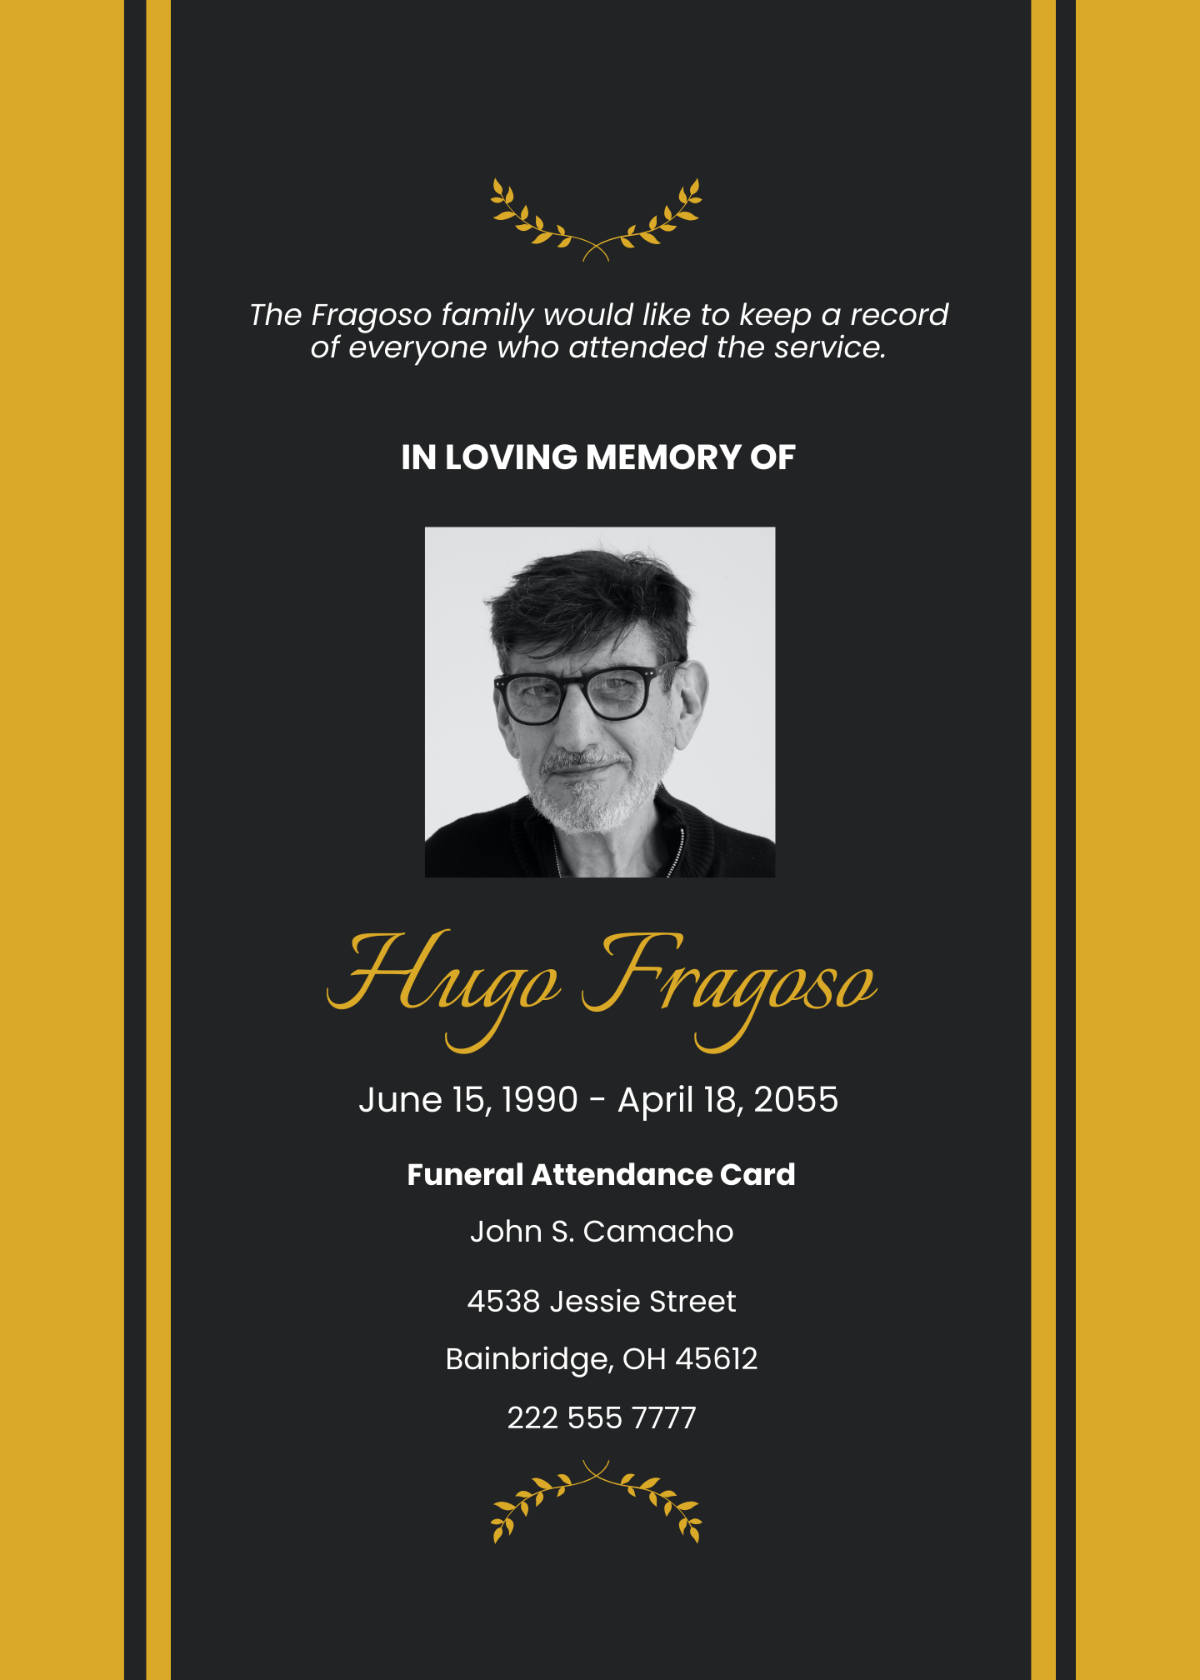 Sample Funeral Attendance Card